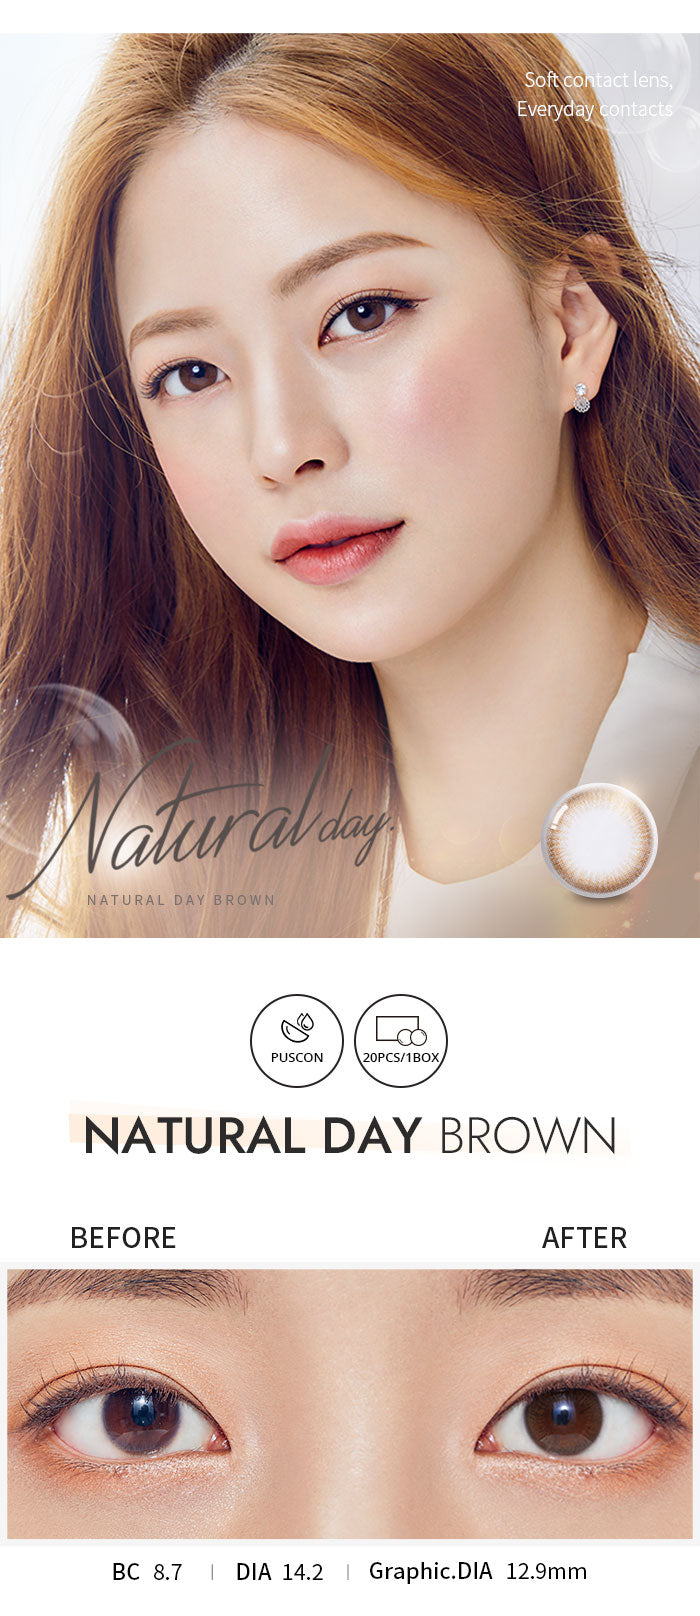 [Ready] O-Lens Natural Day Brown | Daily 5 Pairs